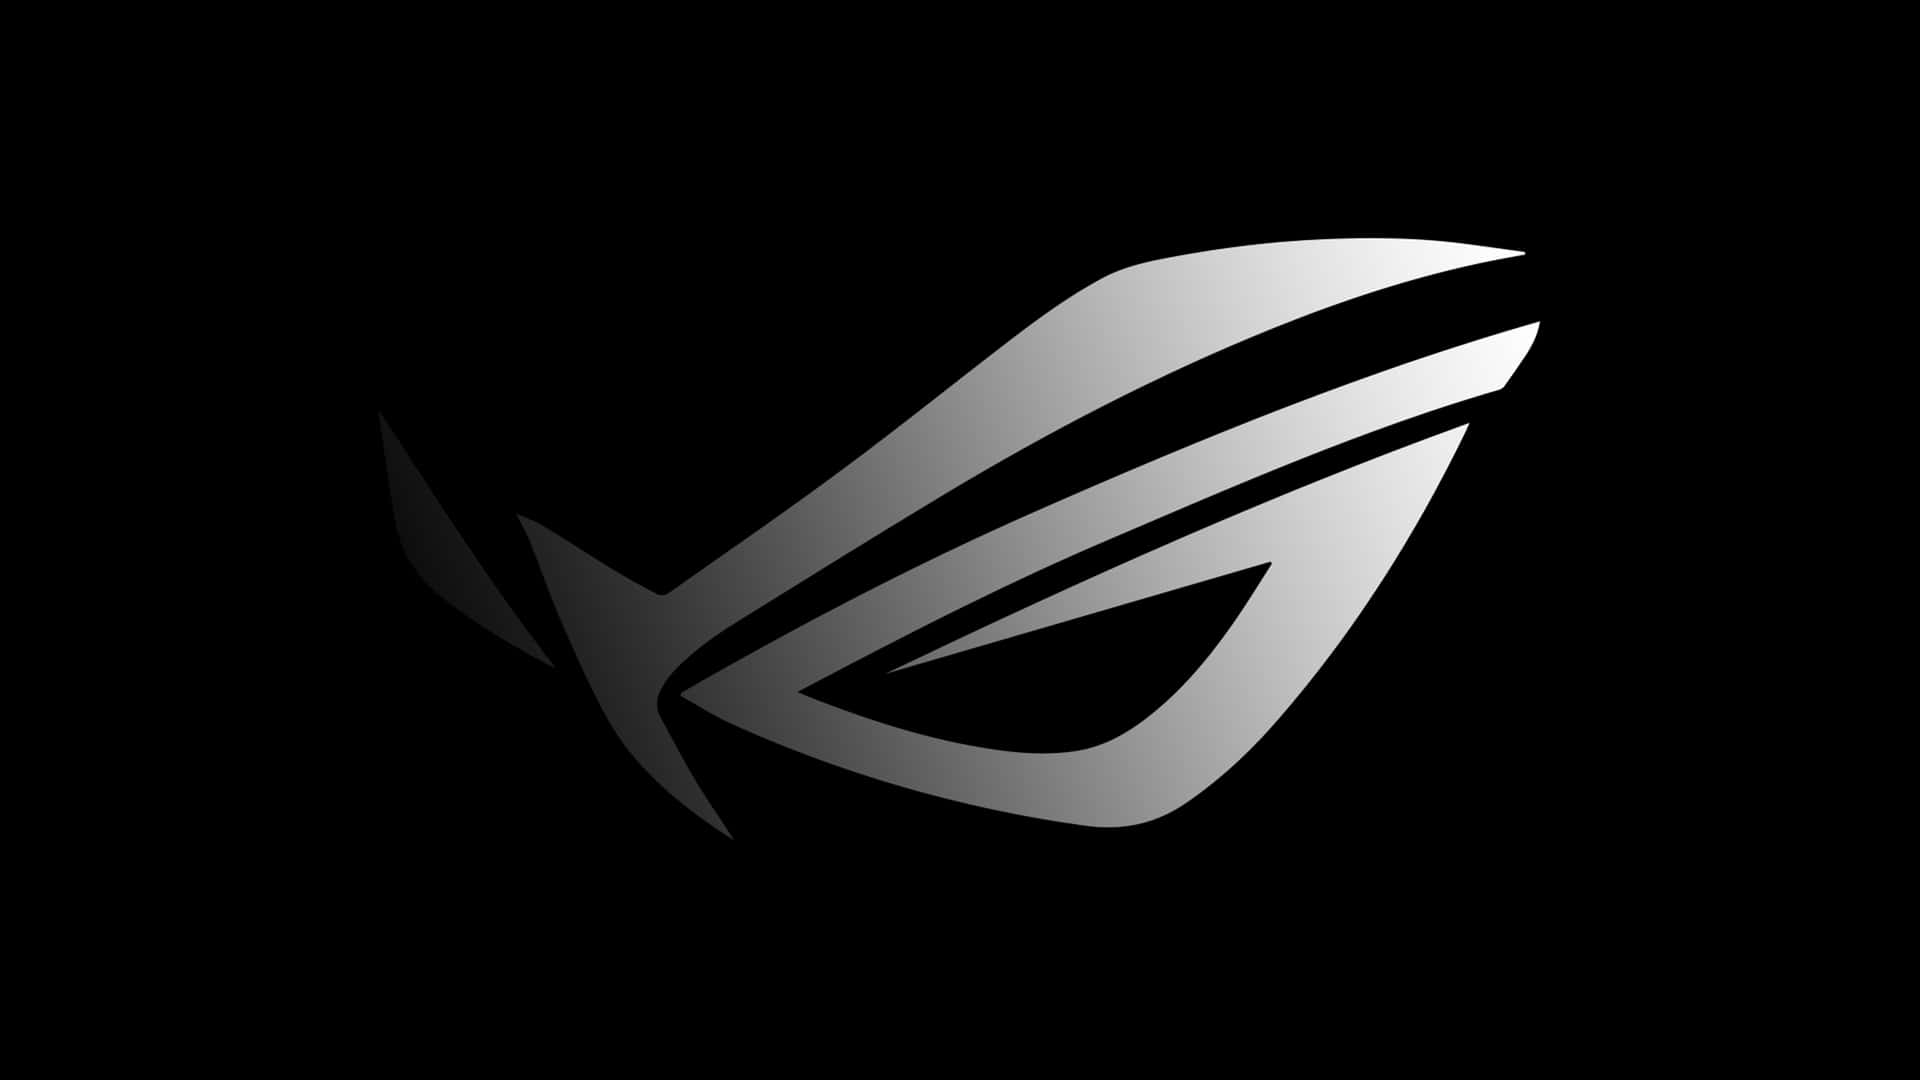 Asus R O G Logo Black Background Background